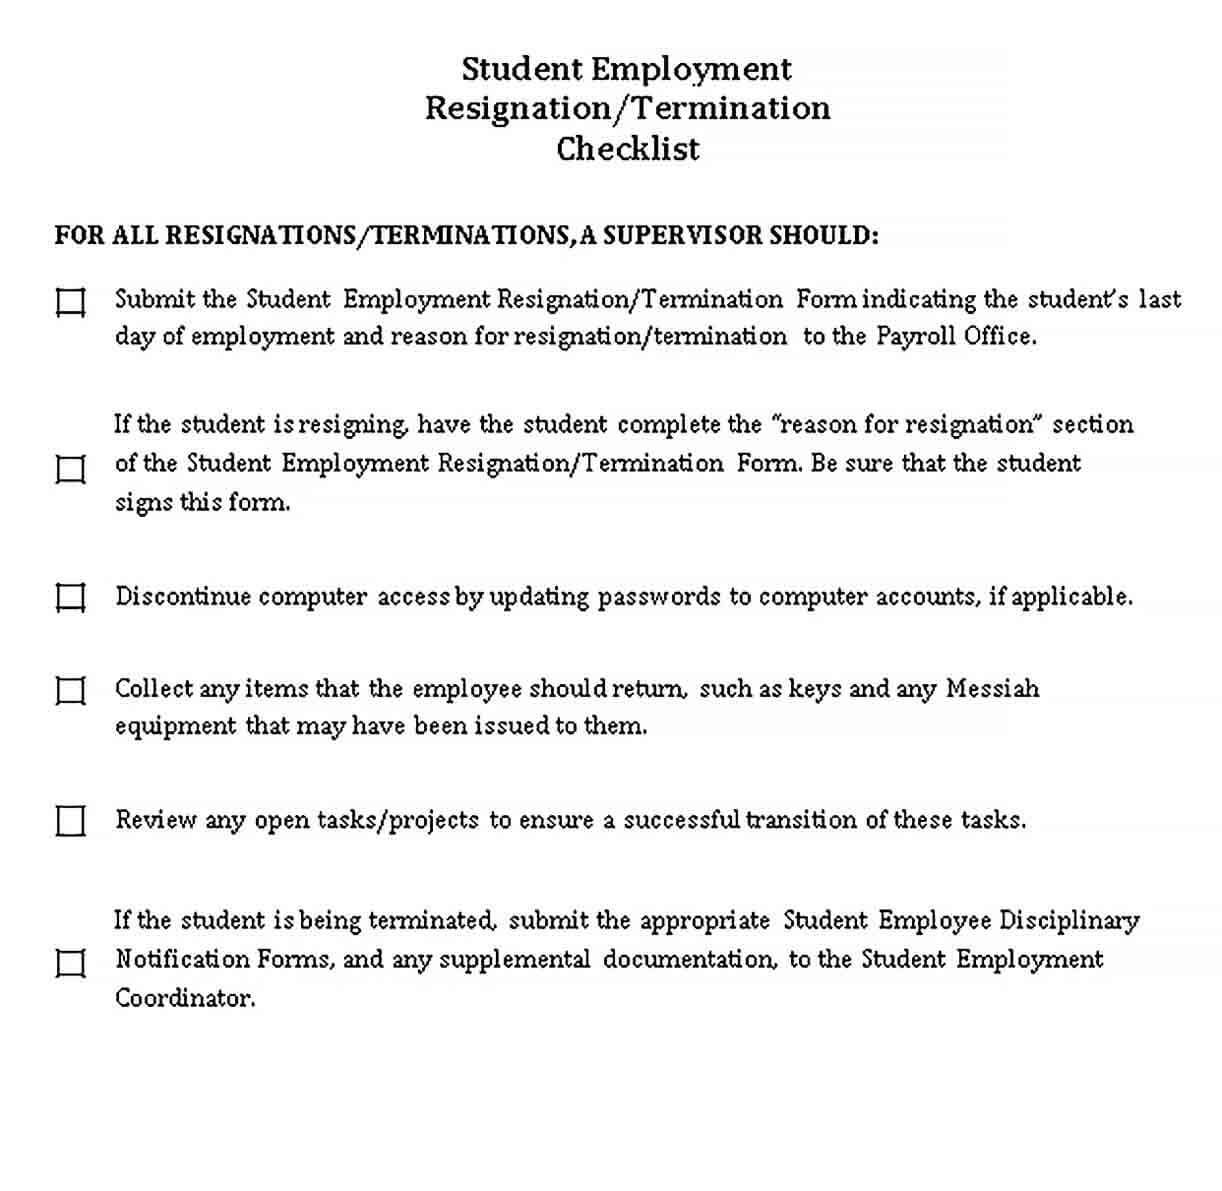 Sample Student Employment Resignation Checklist